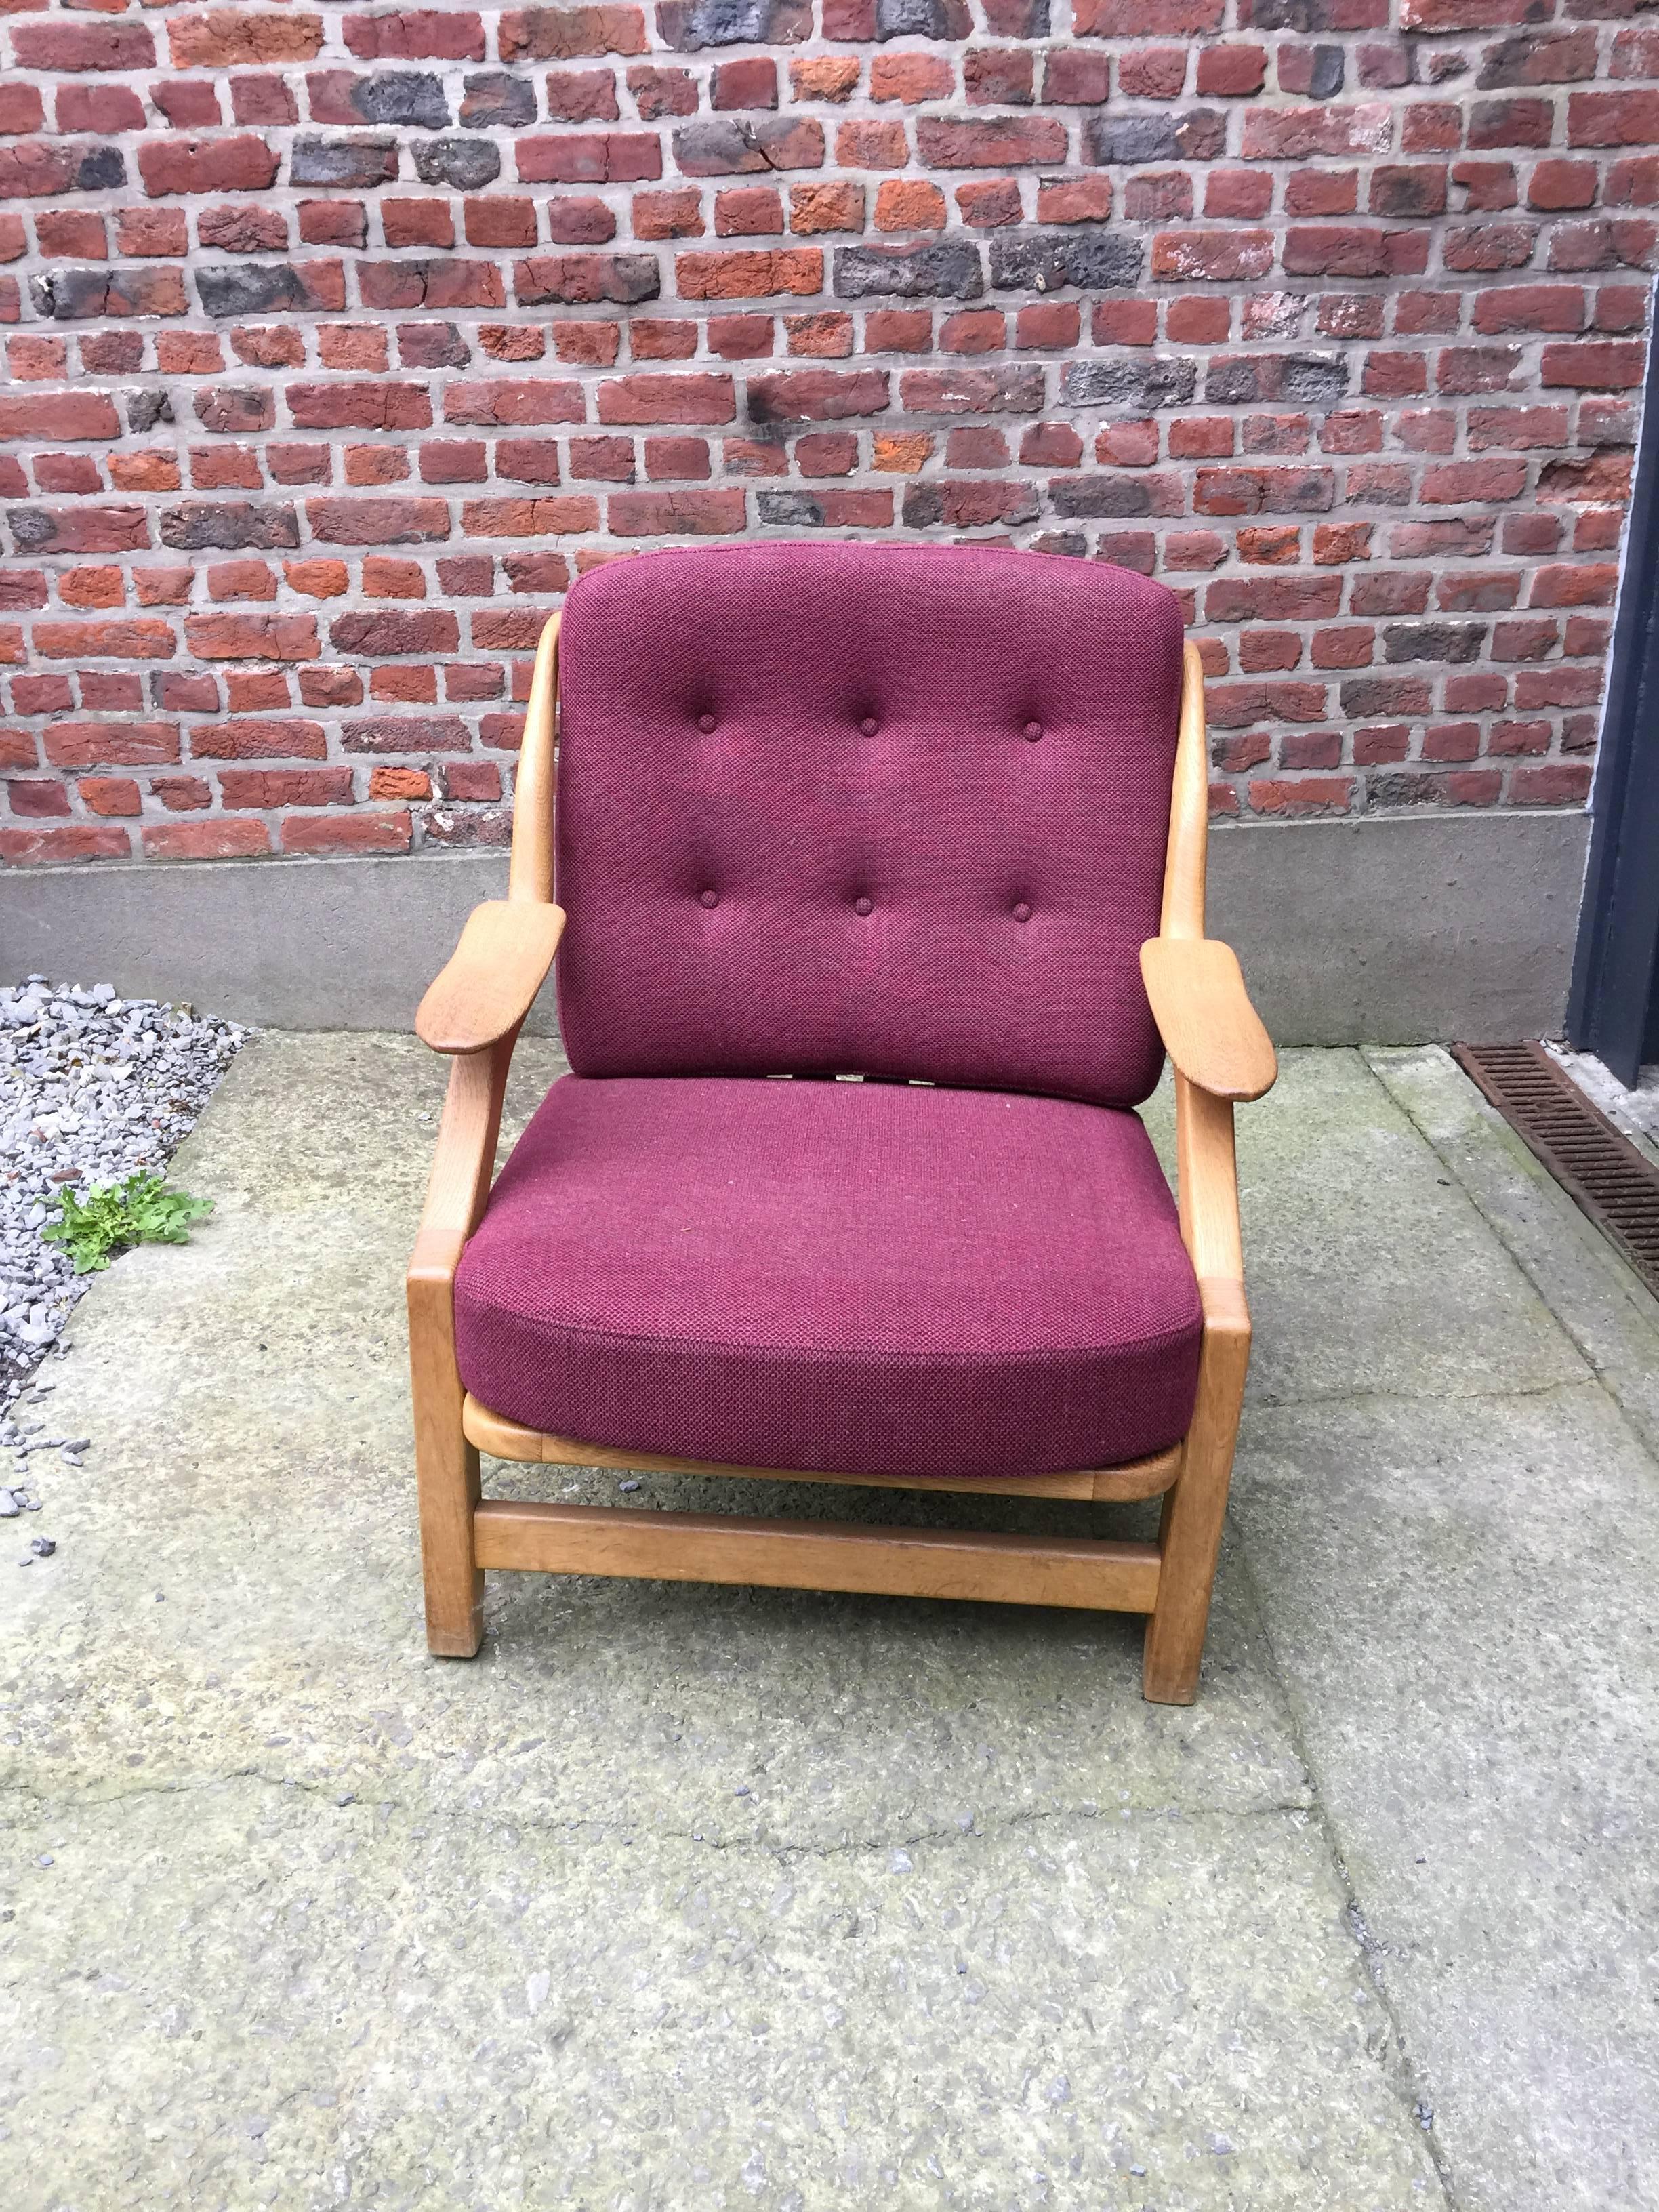 Guillerme & Chambron oak easy chair, with original fabric
Votre Maison Editor.